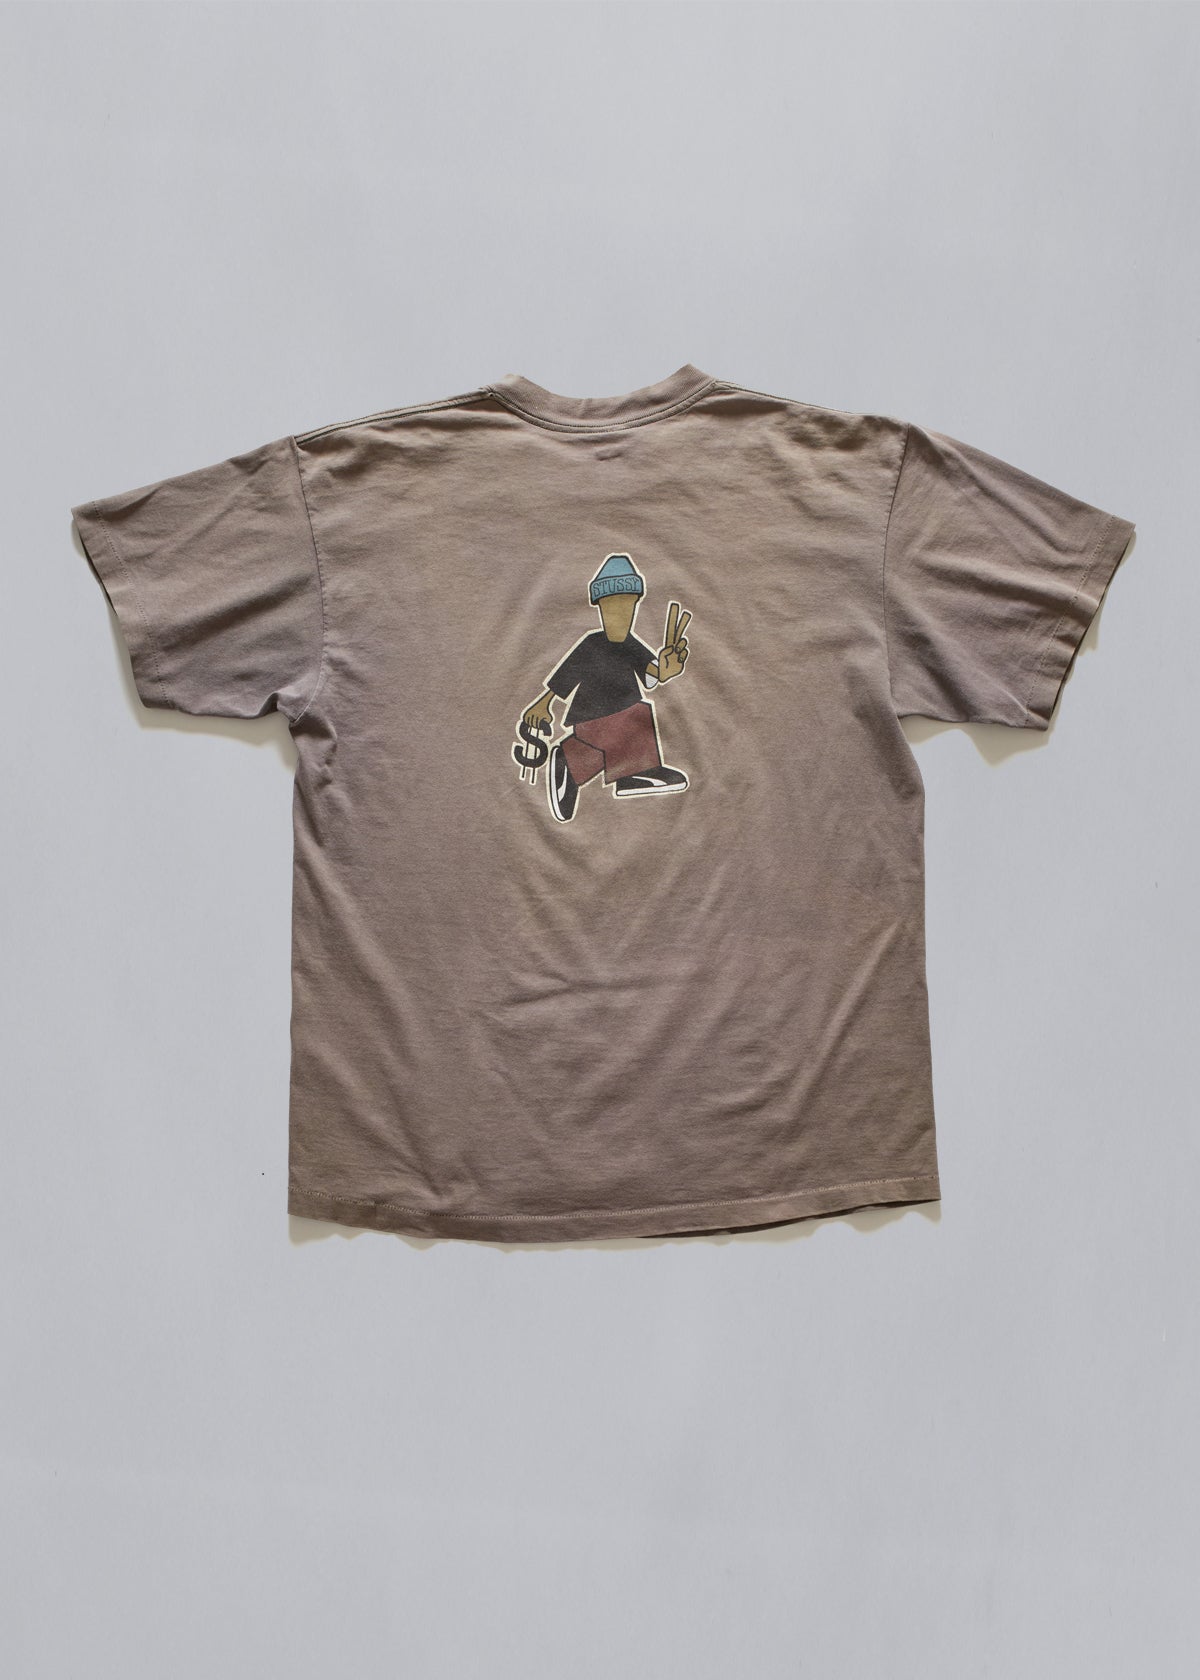 Peace & Prosperity T-Shirt 1993 - X-Large